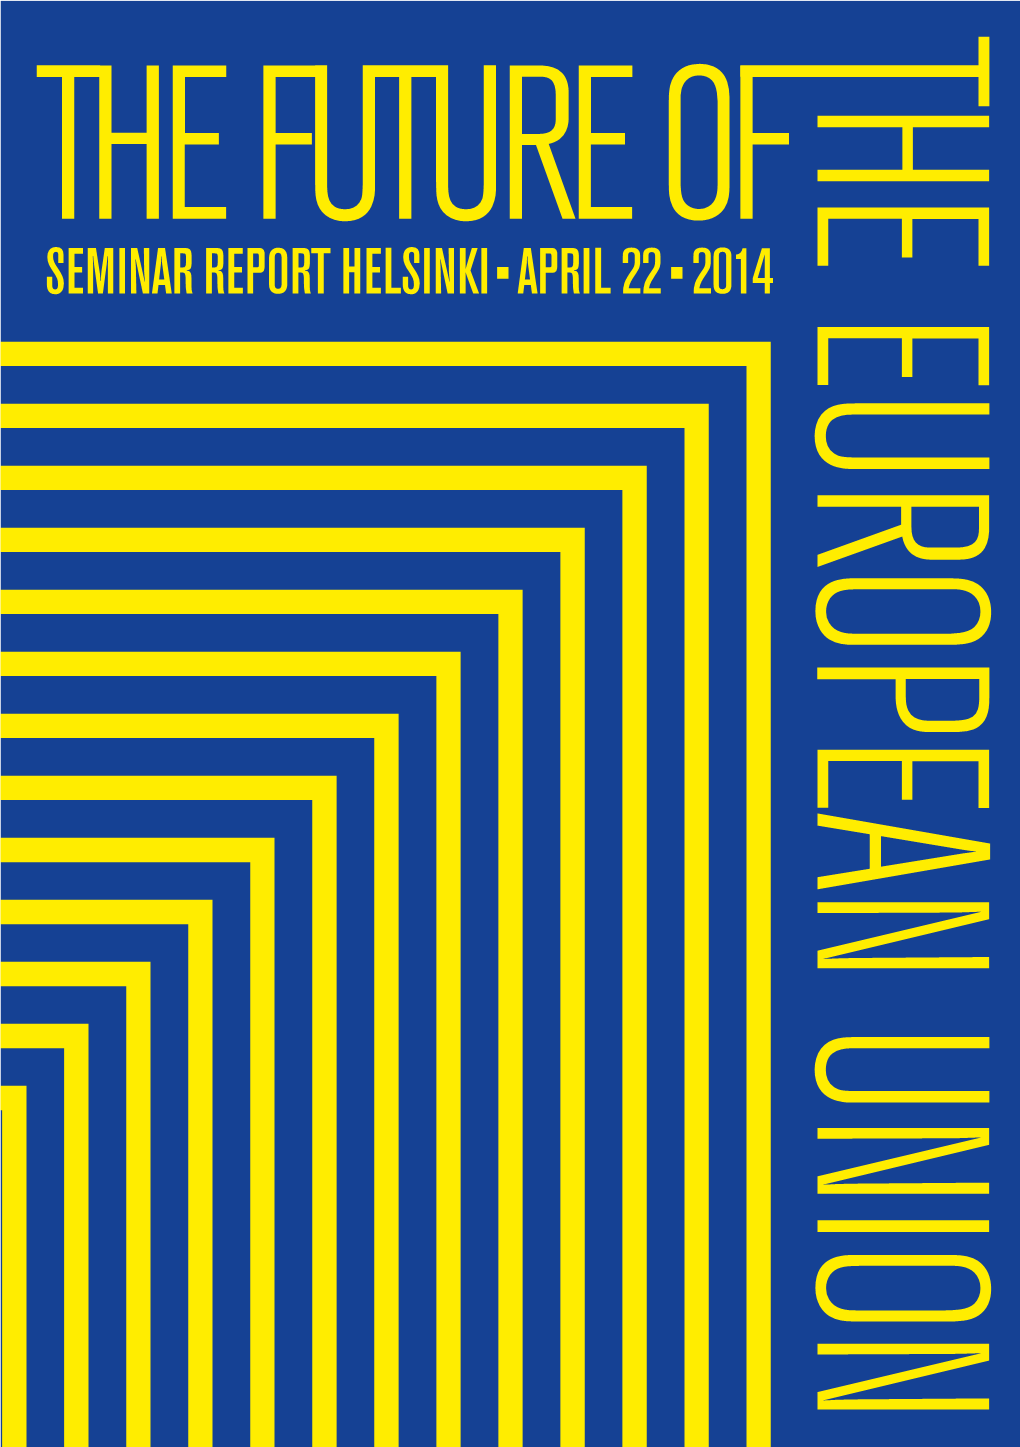 Seminar Report Helsinki April 22 2014